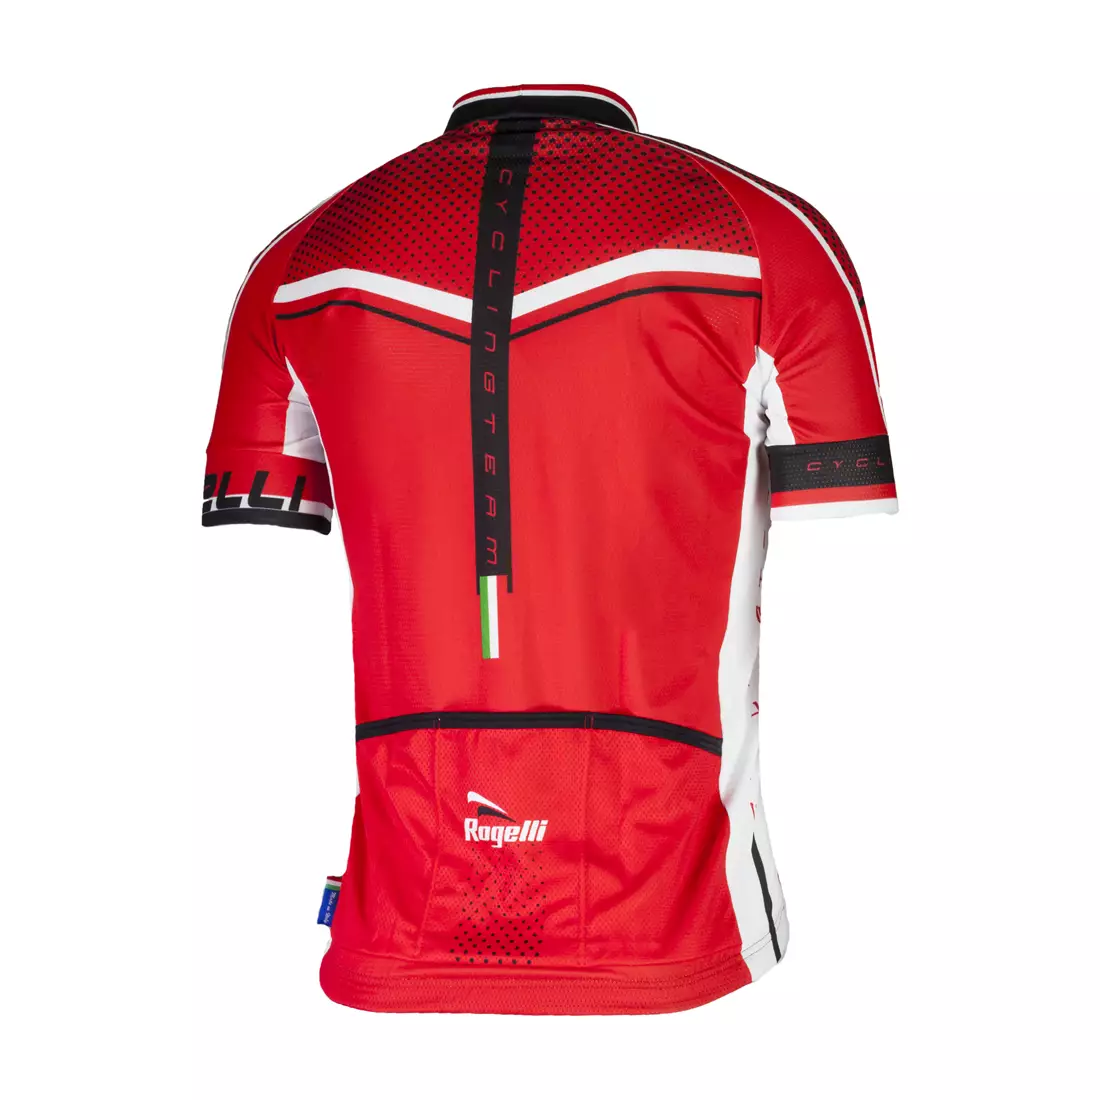 ROGELLI GARA MOSTRO - men's cycling jersey 001.243, red